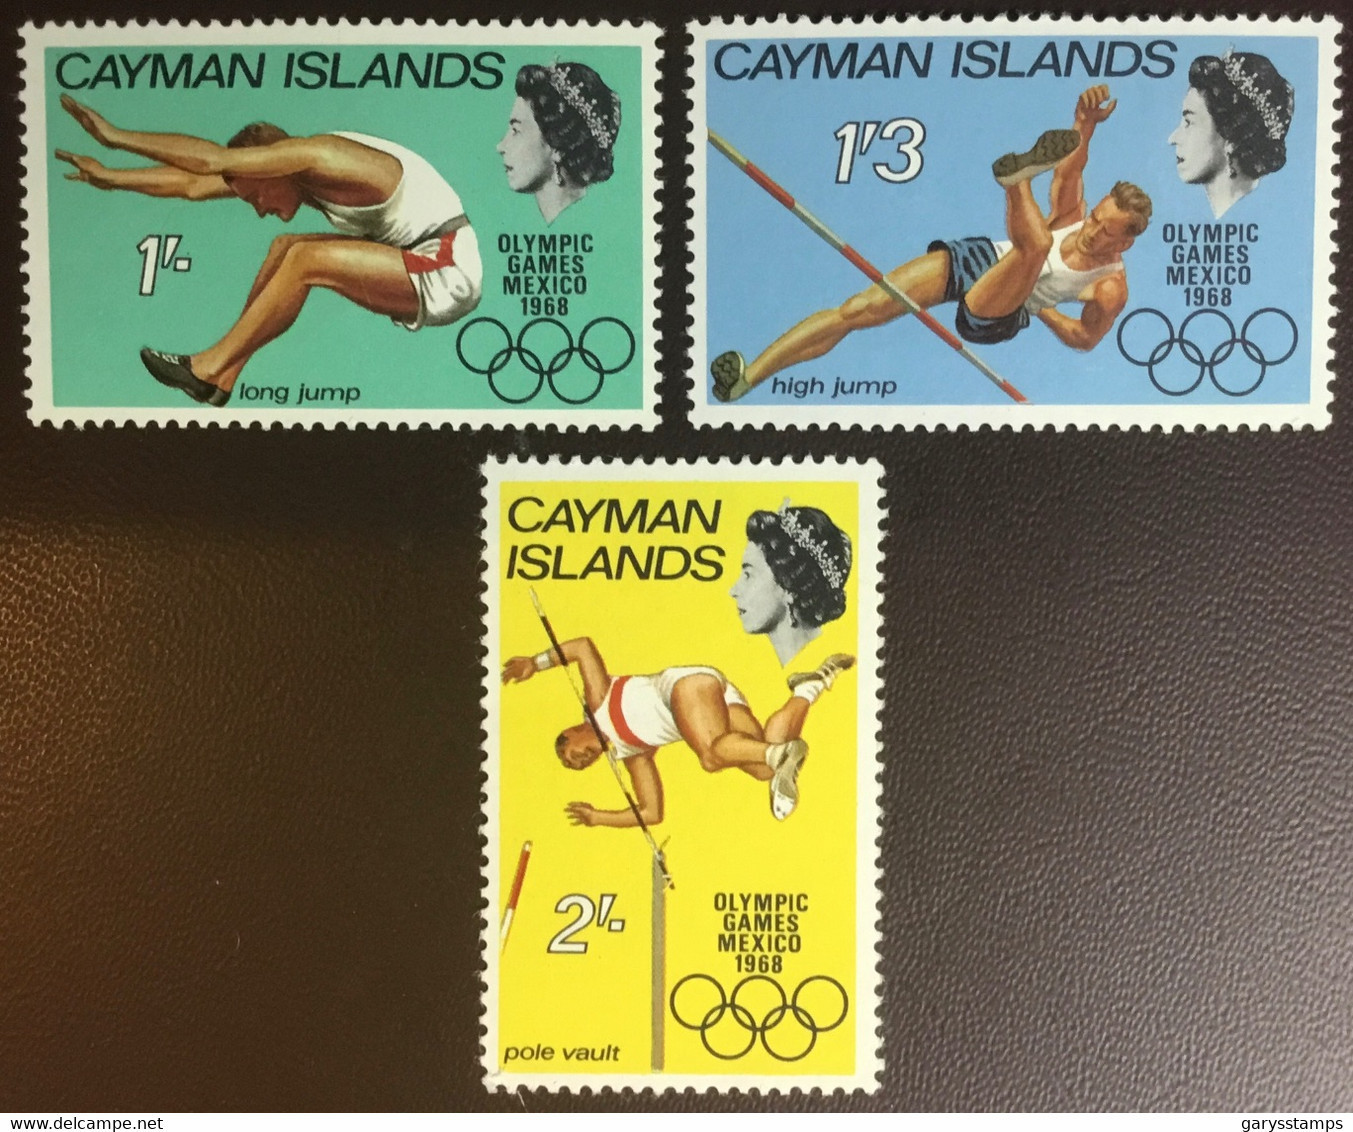 Cayman Islands 1968 Olympic Games MNH - Cayman Islands